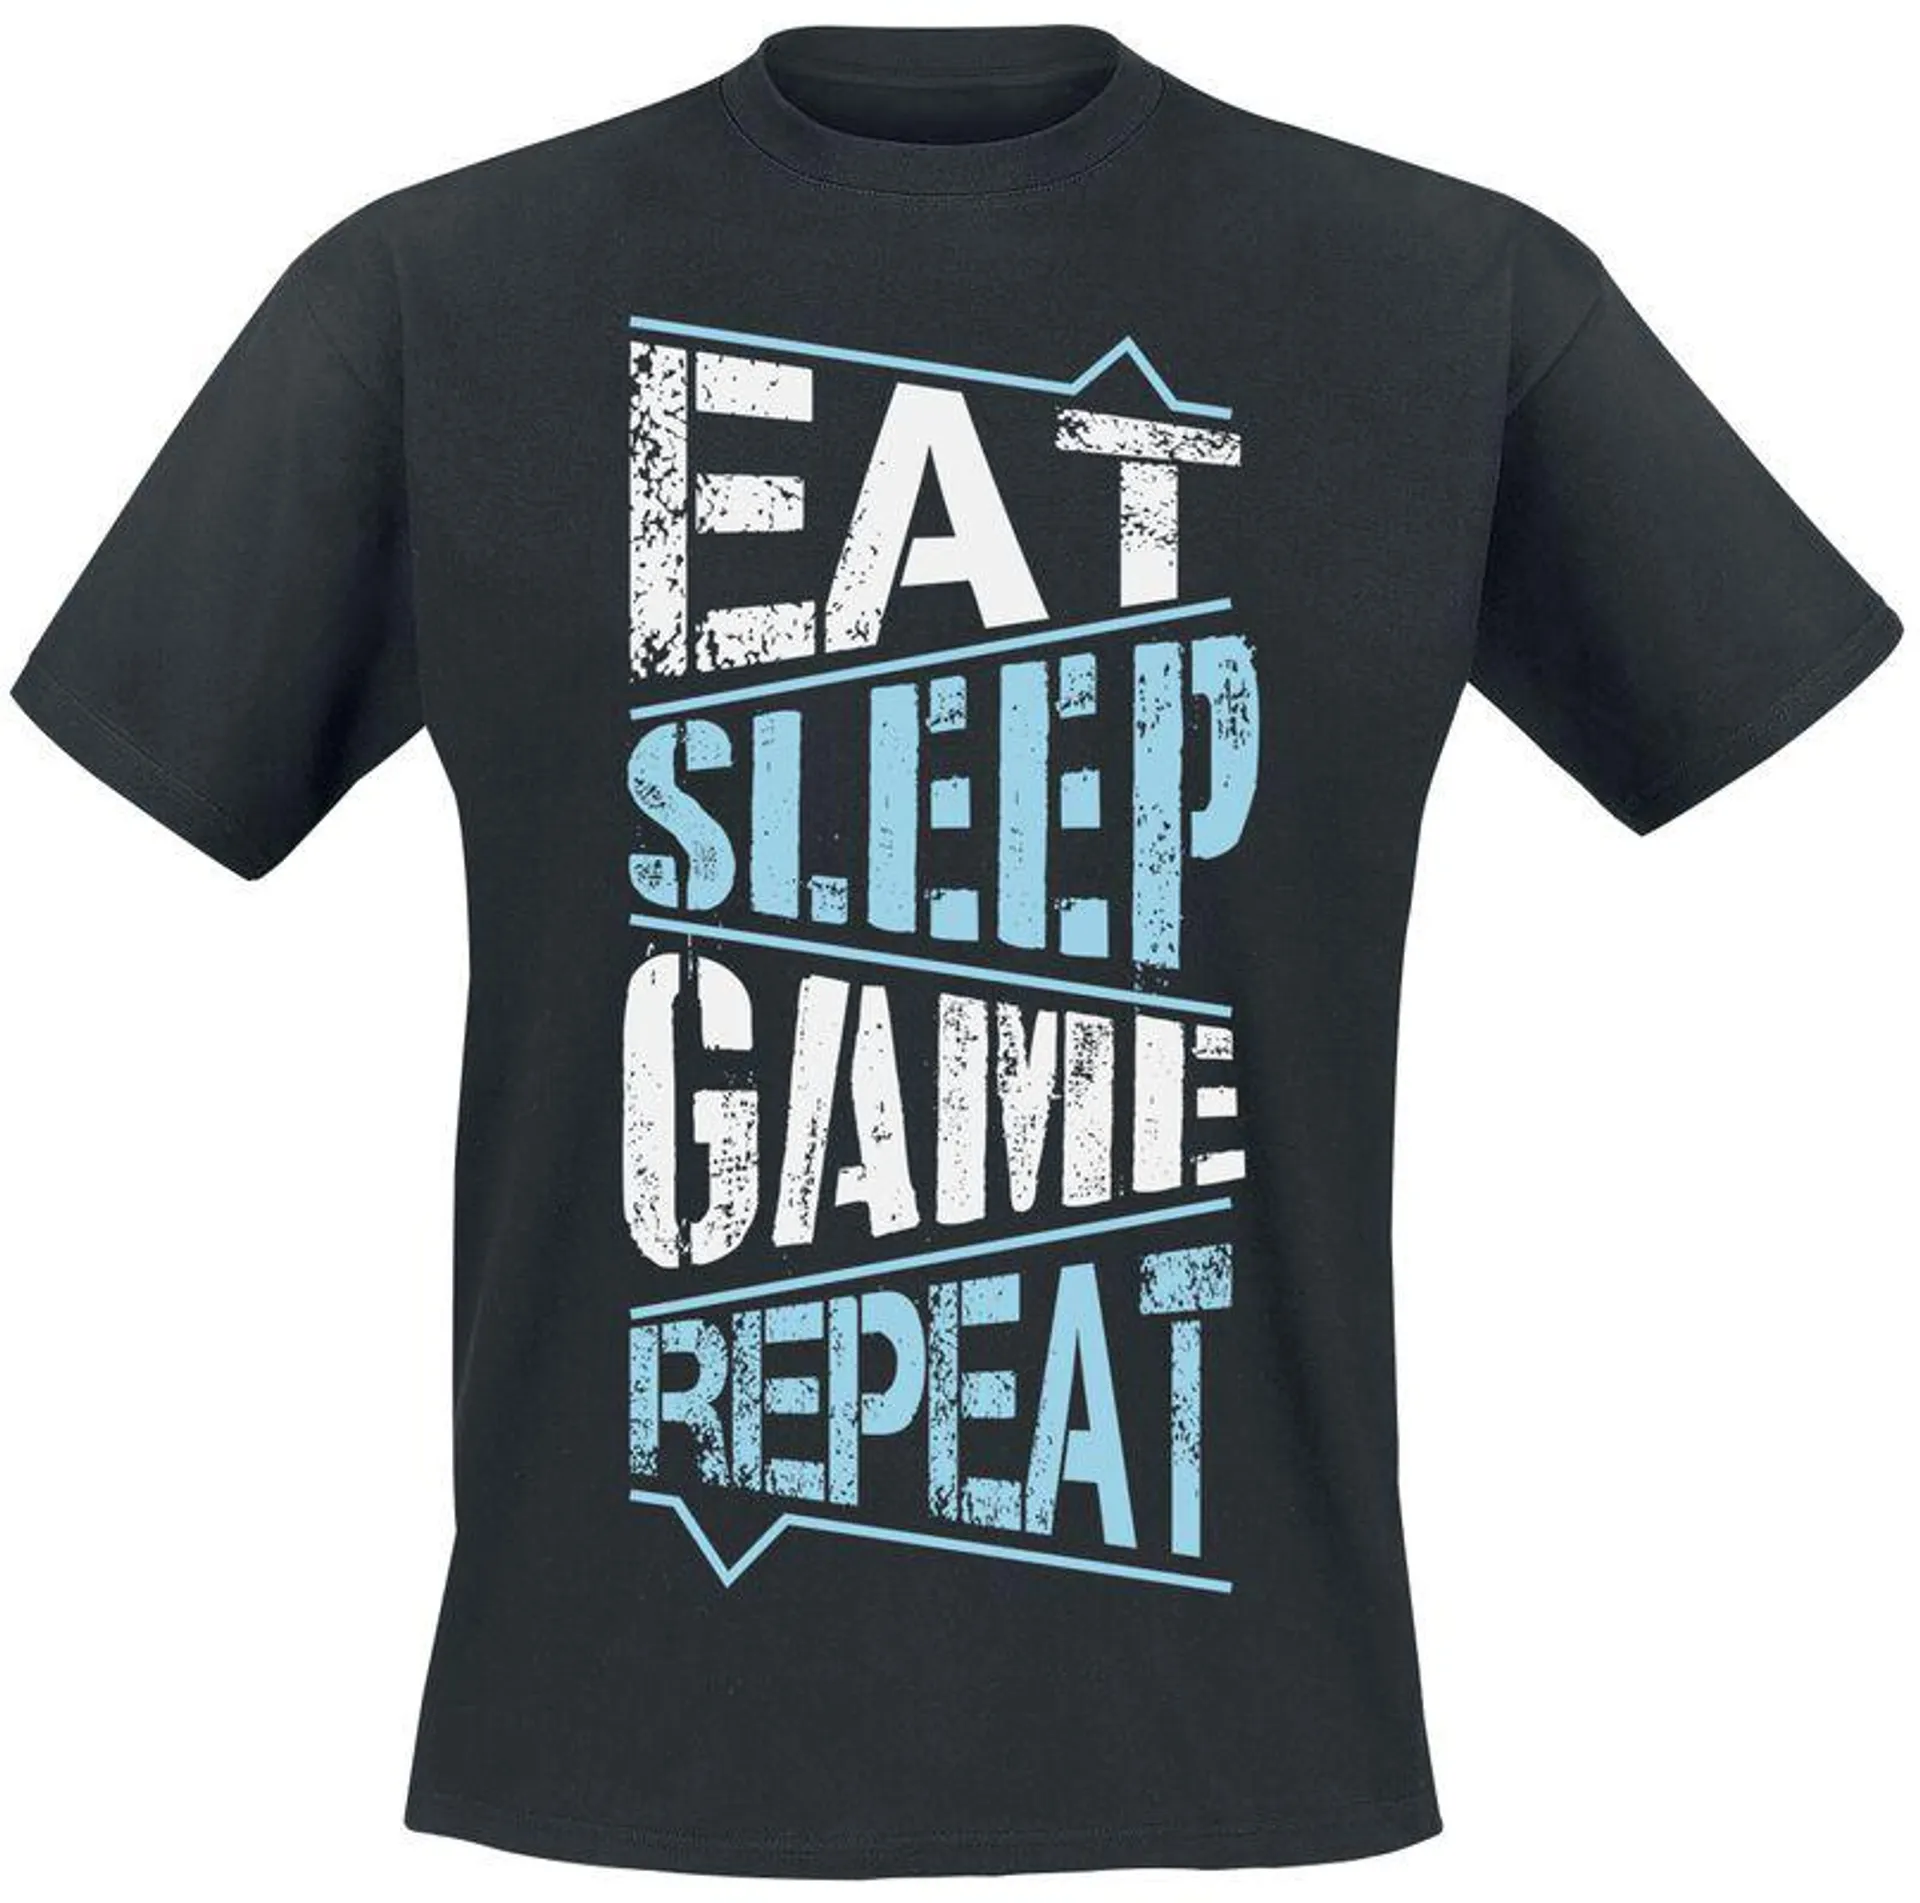 "Eat Sleep Game Repeat" Camiseta Negro de Eat Sleep Game Repeat